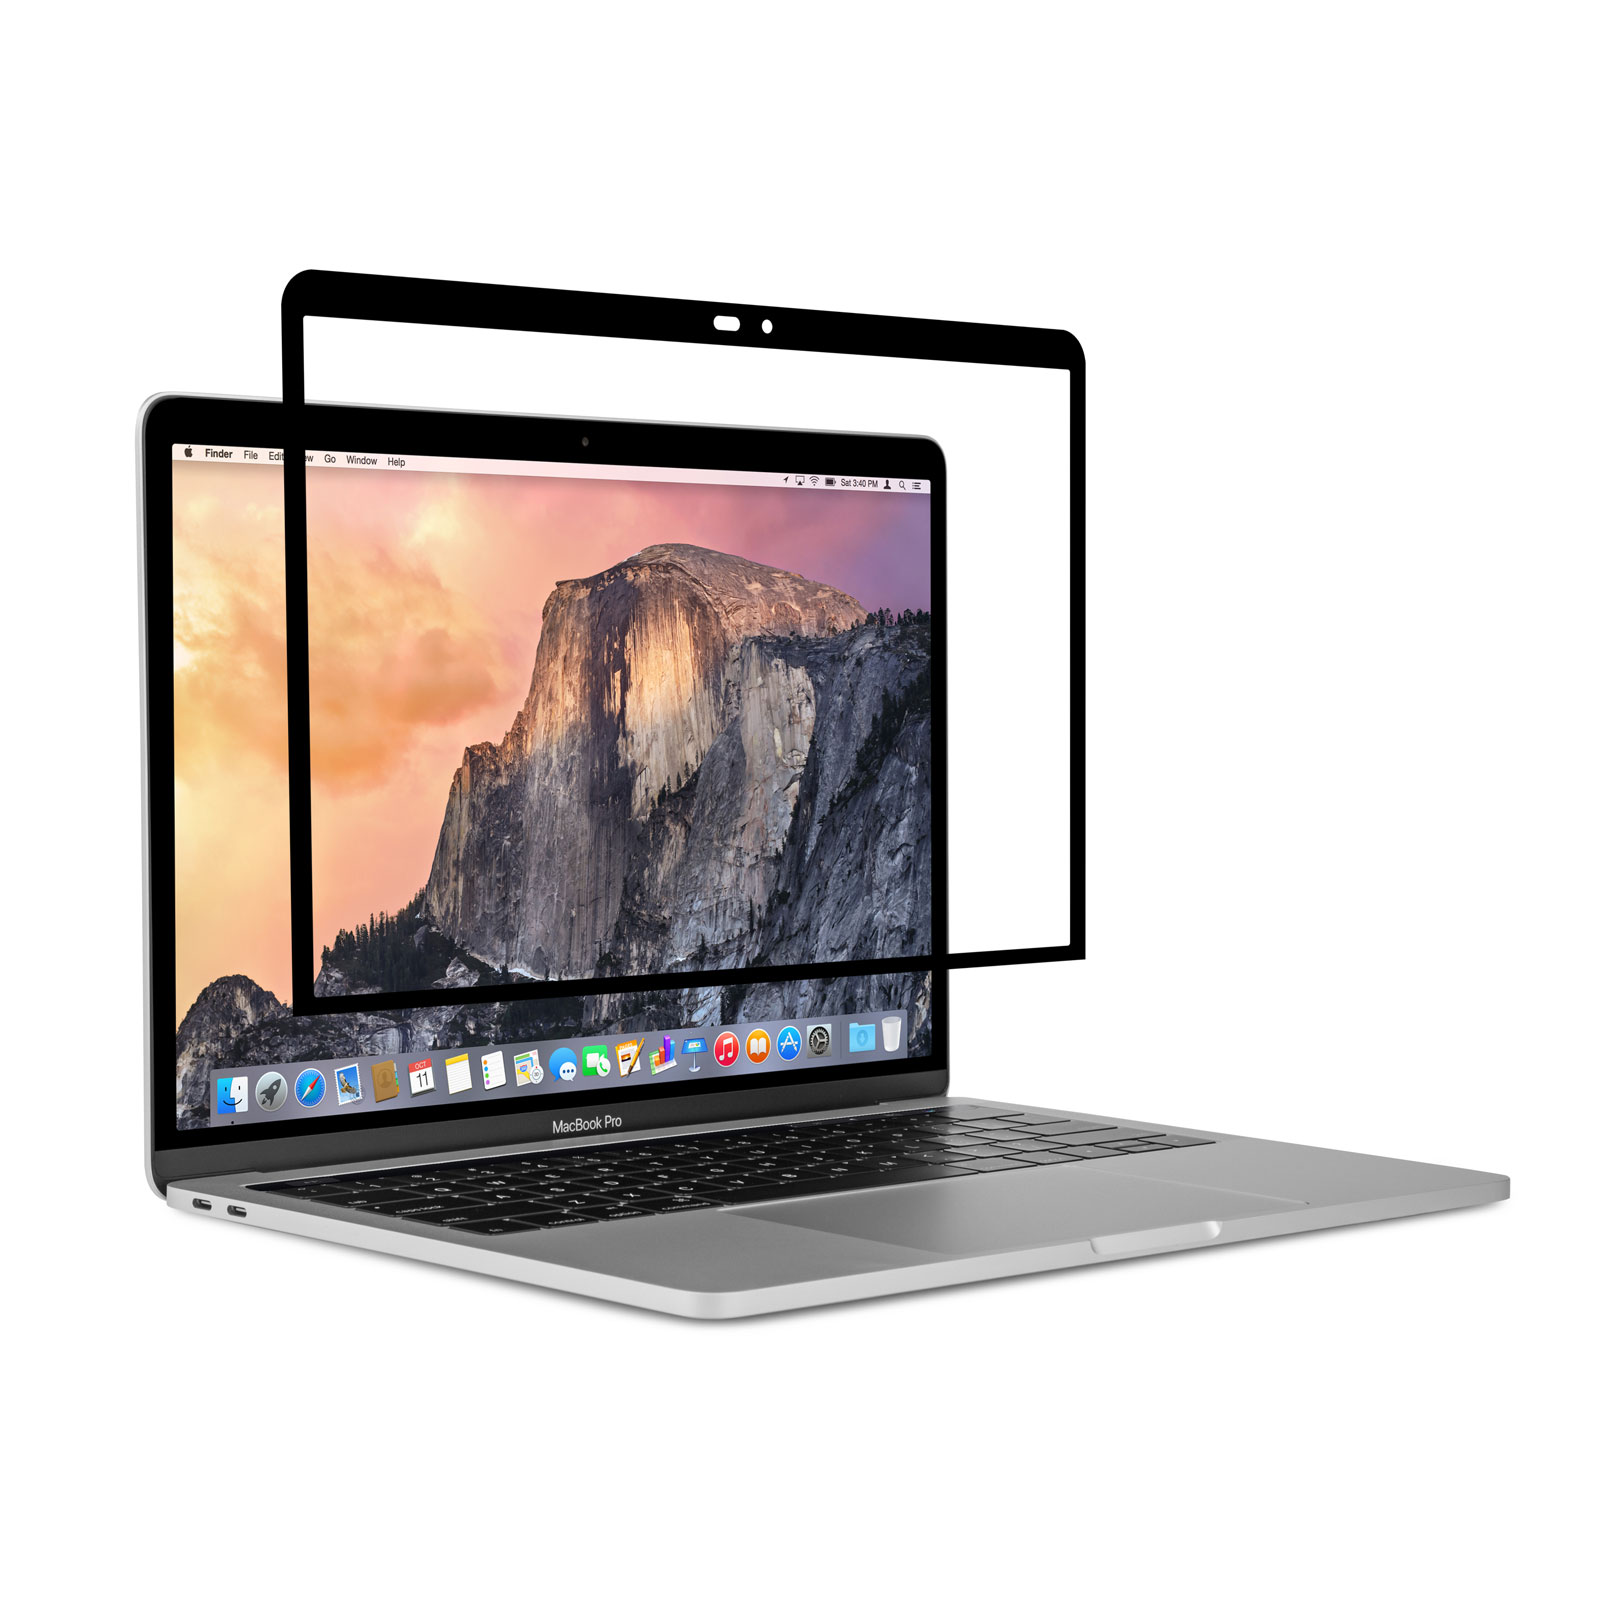 Matte Folie Moshi iVisor für MacBook Pro 13 2019-2016 (A2159 / A1989 / A1708 / A1706)/MacBook Air 13 2020-2018 (A1932)